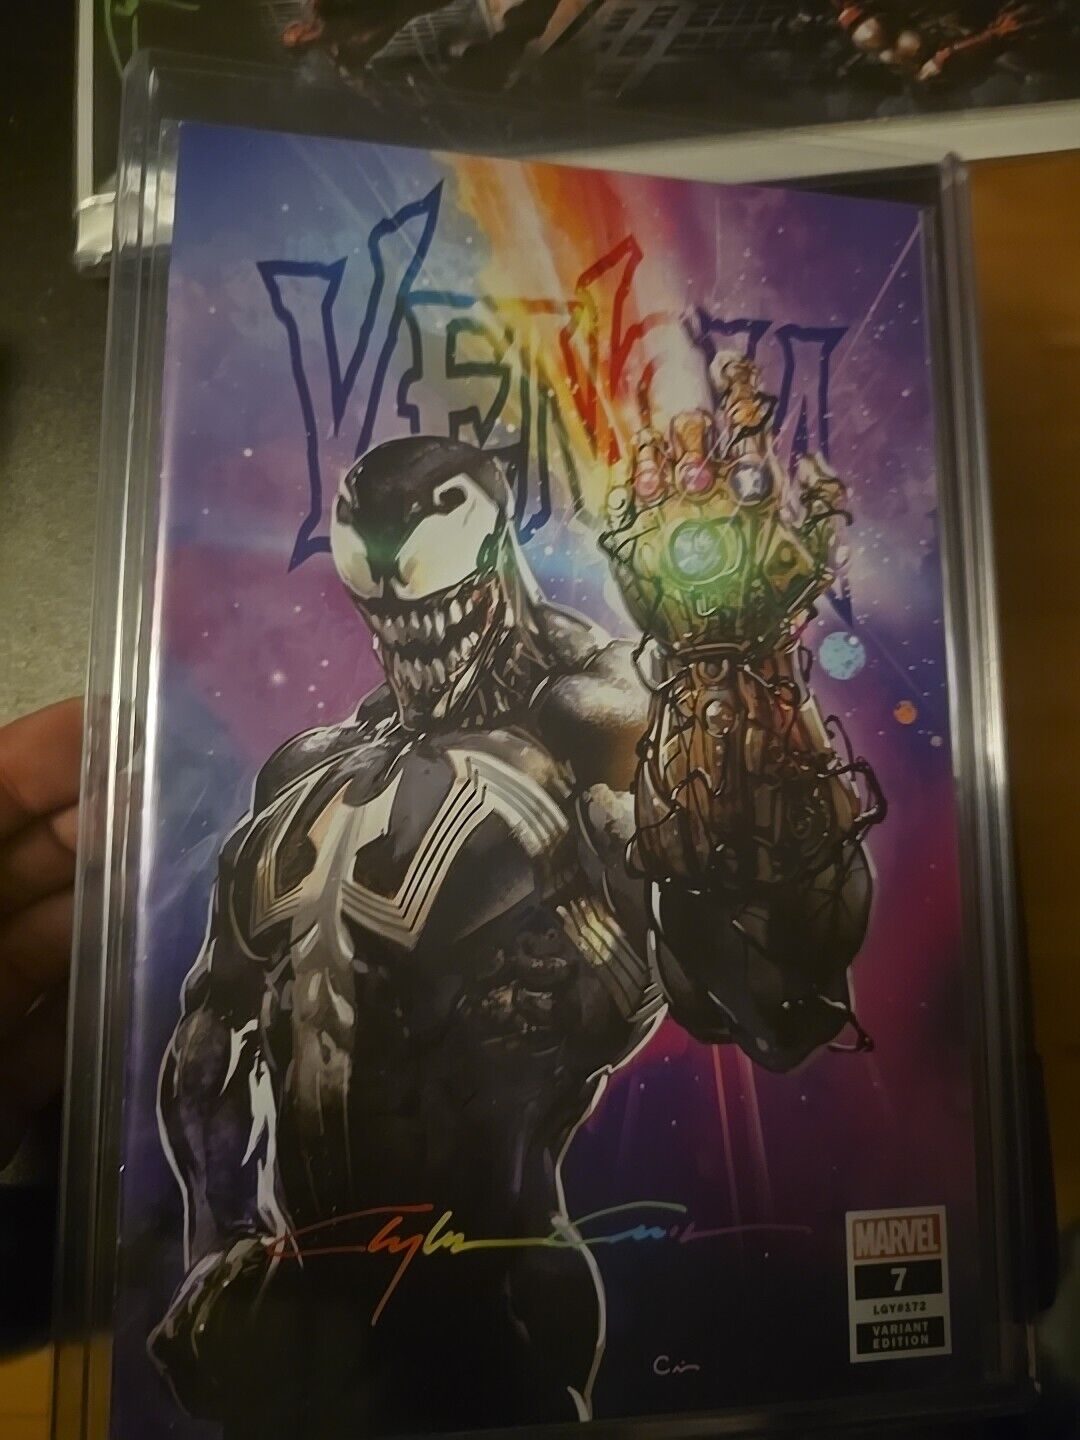 Venom #7 (2018 Frankie\'s Comics Edition) - Signed by Clayton Crain With COA